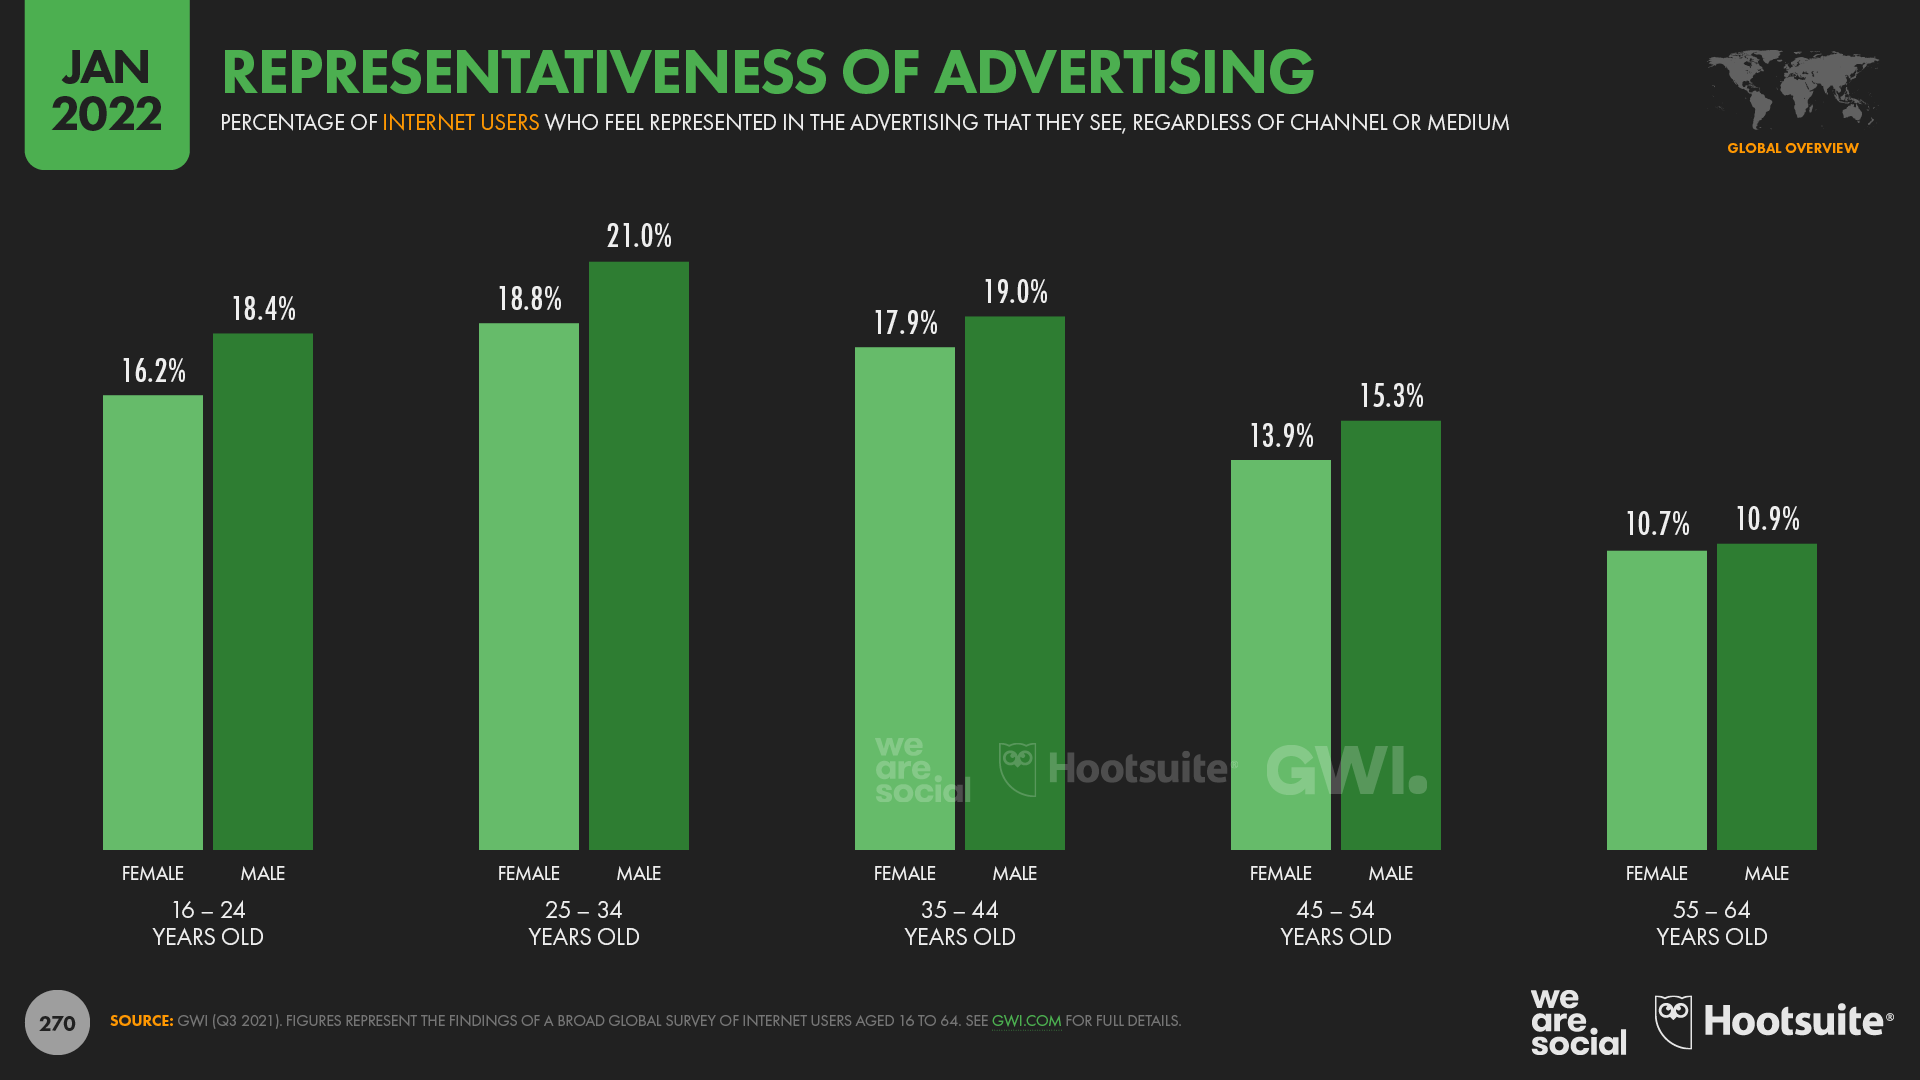 chart showing representativeness of advertising